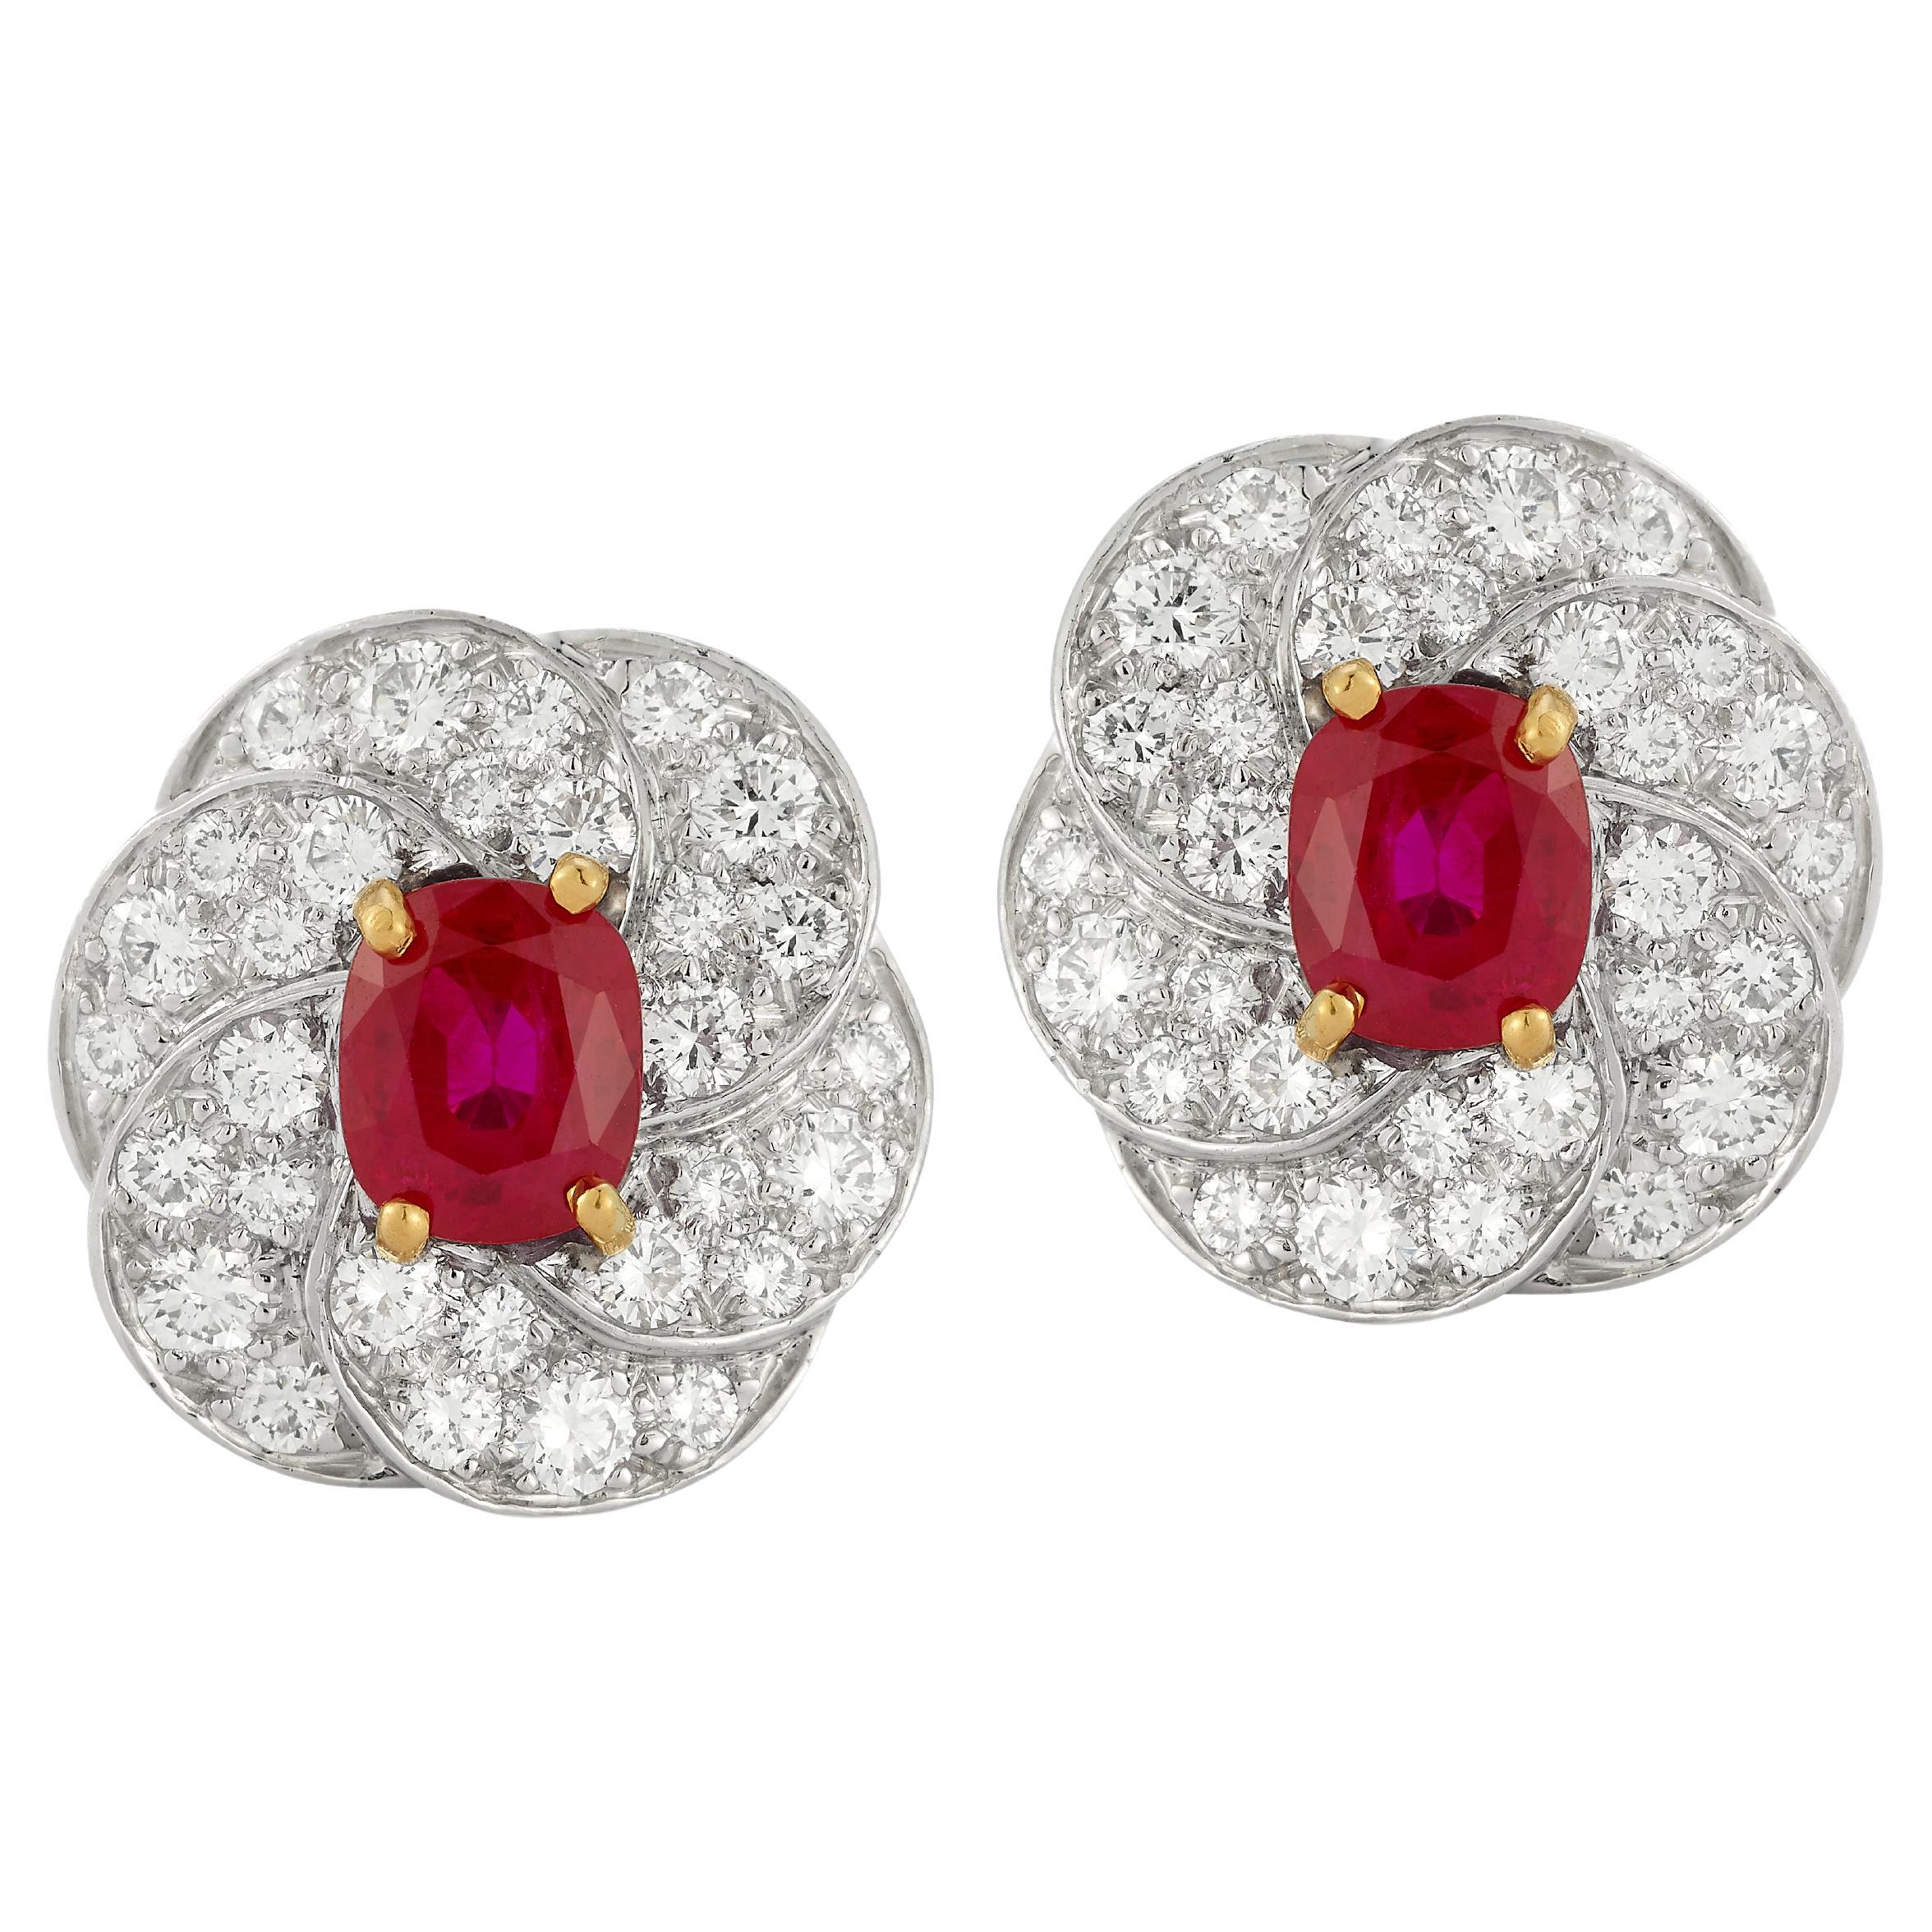 Oscar Heyman Brothers Certified Burmese Ruby & Diamond Earrings